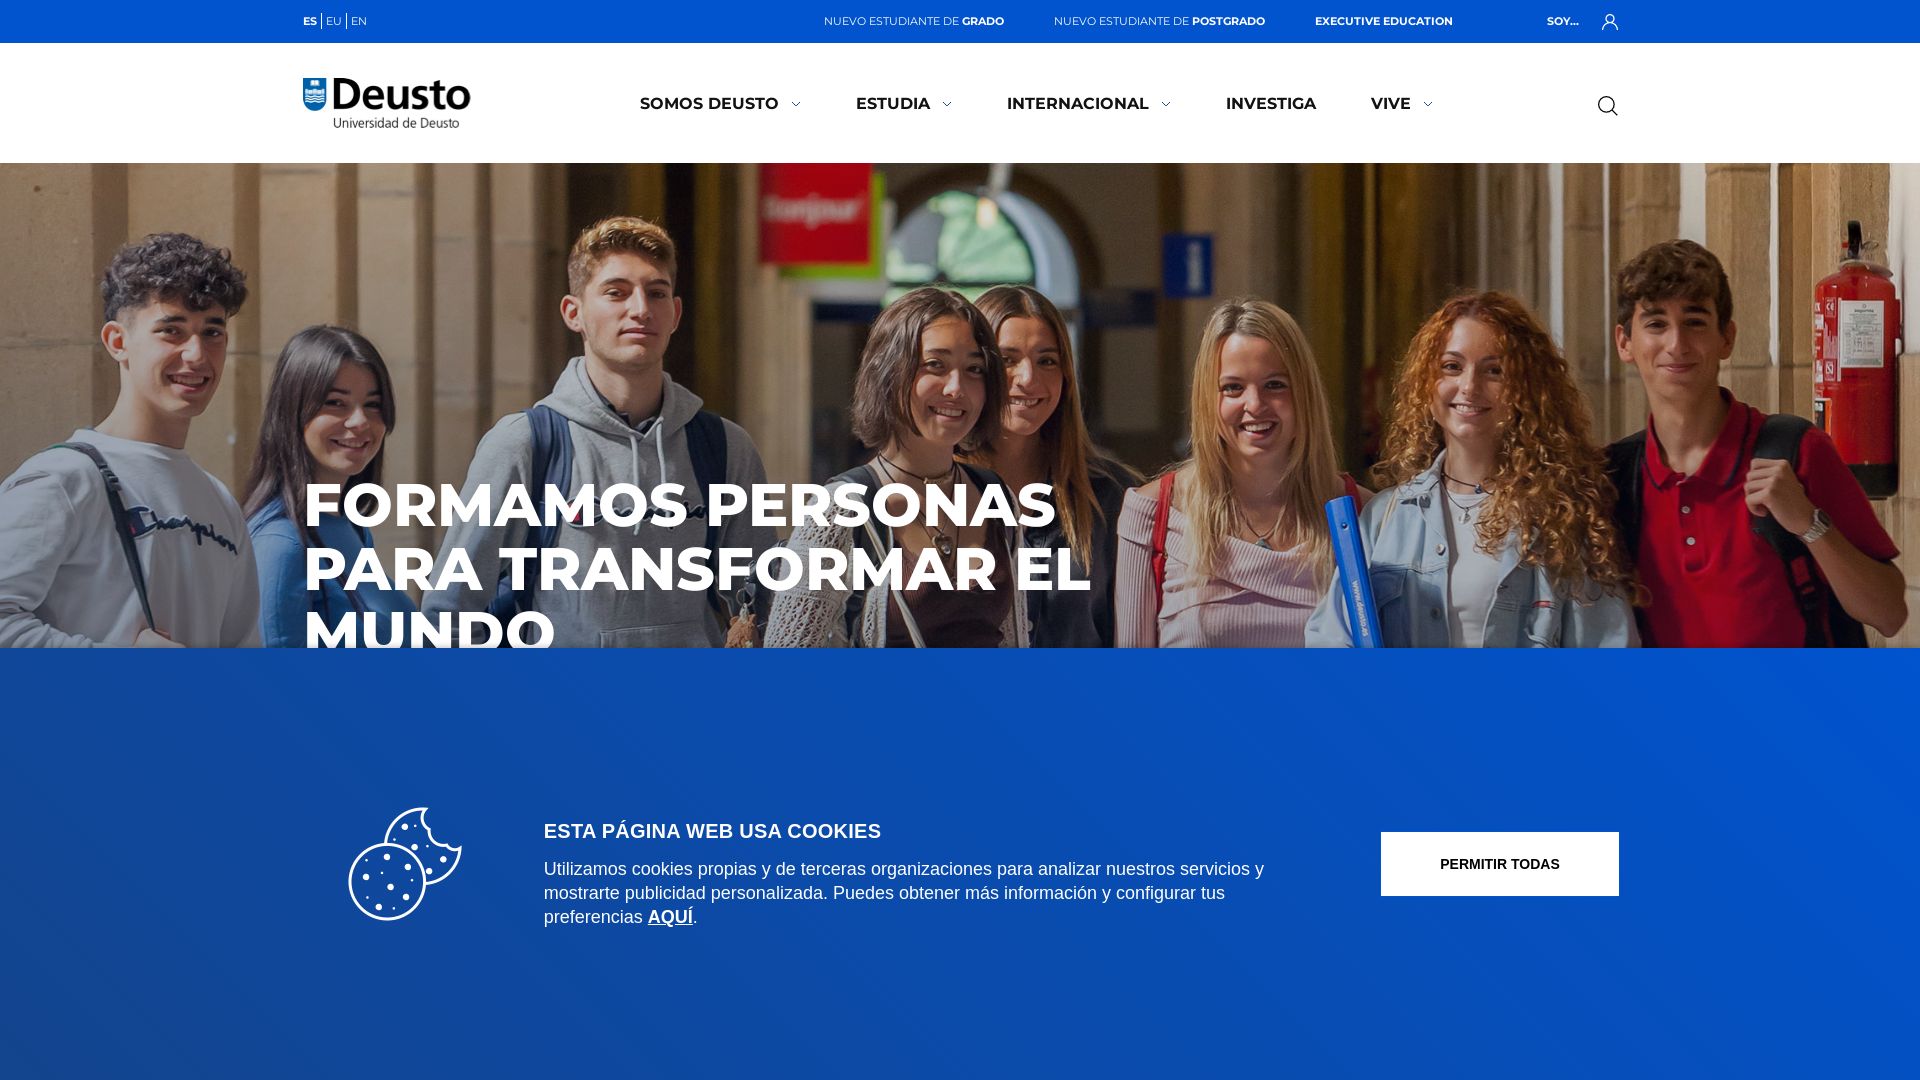 вебсайт deusto.es Є   ONLINE